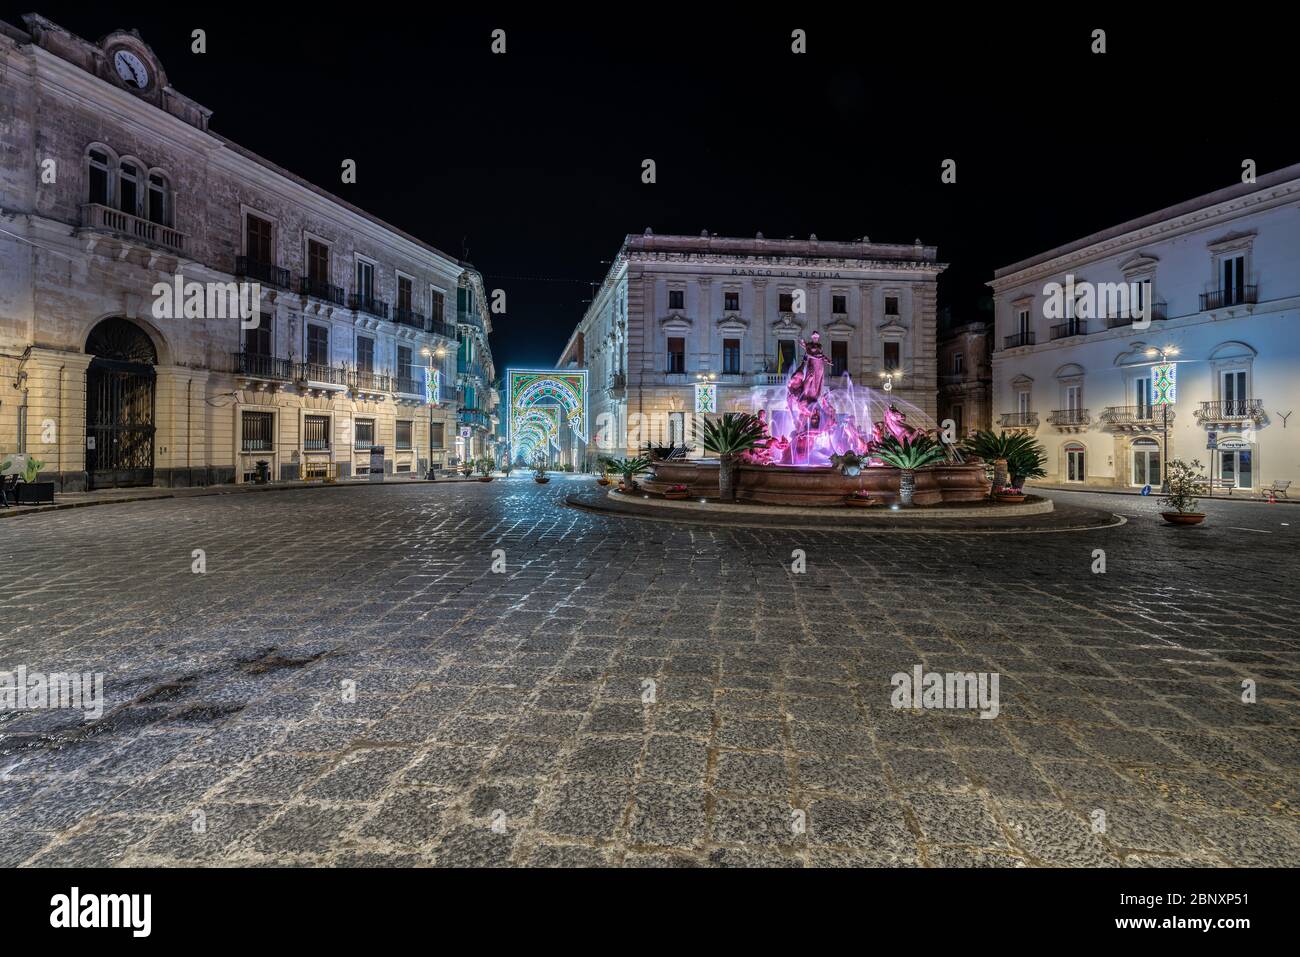 Syrakus Sizilien/ Italien - Dezember 28 2019: Arthemis-Brunnen auf dem Archimede-Platz. - Bild Stockfoto